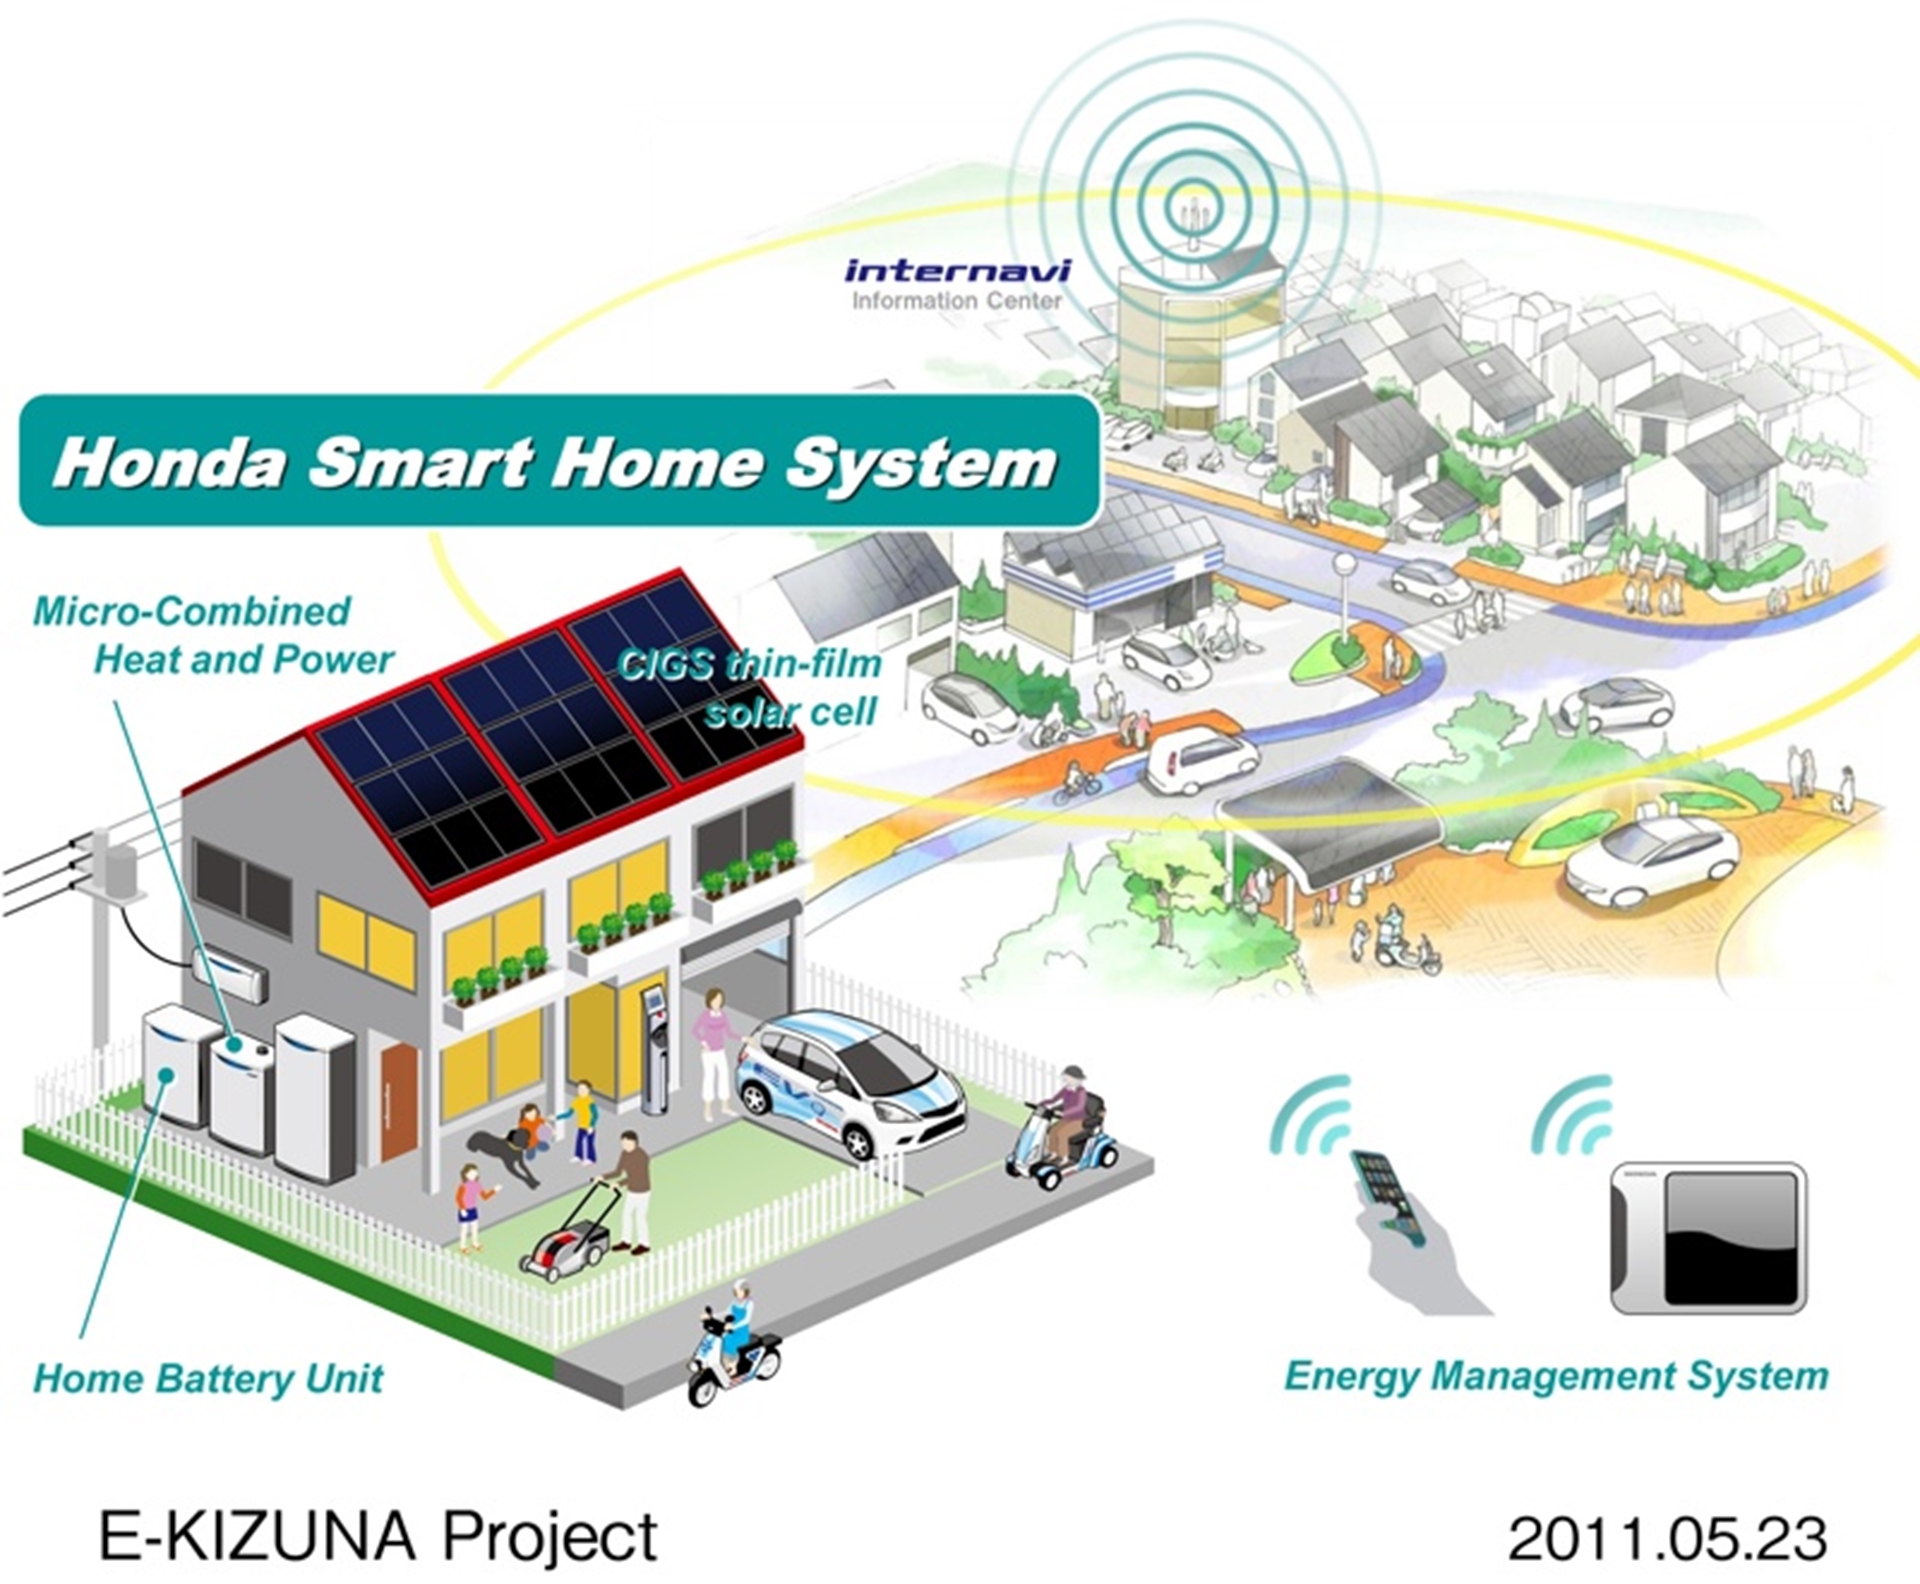 Honda Unveils Demonstration Test House Featuring Honda Smart Home System